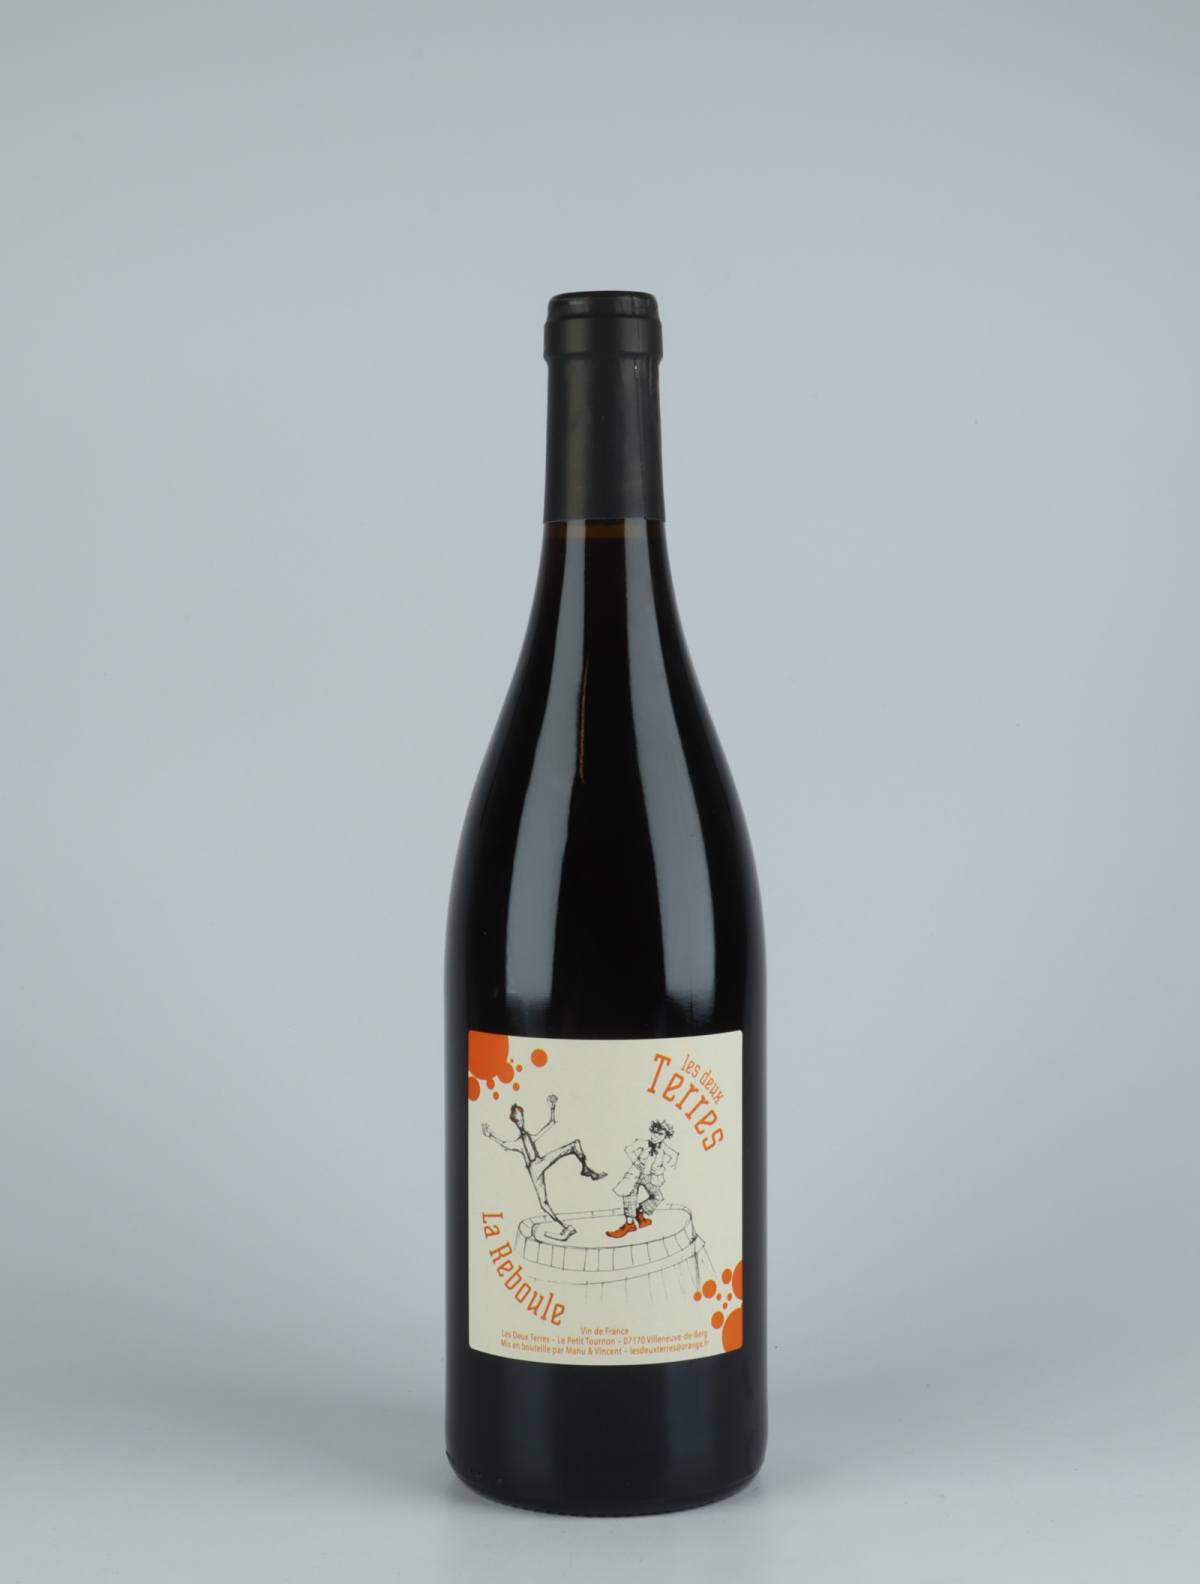 A bottle 2020 Reboule Red wine from Les Deux Terres, Ardèche in France